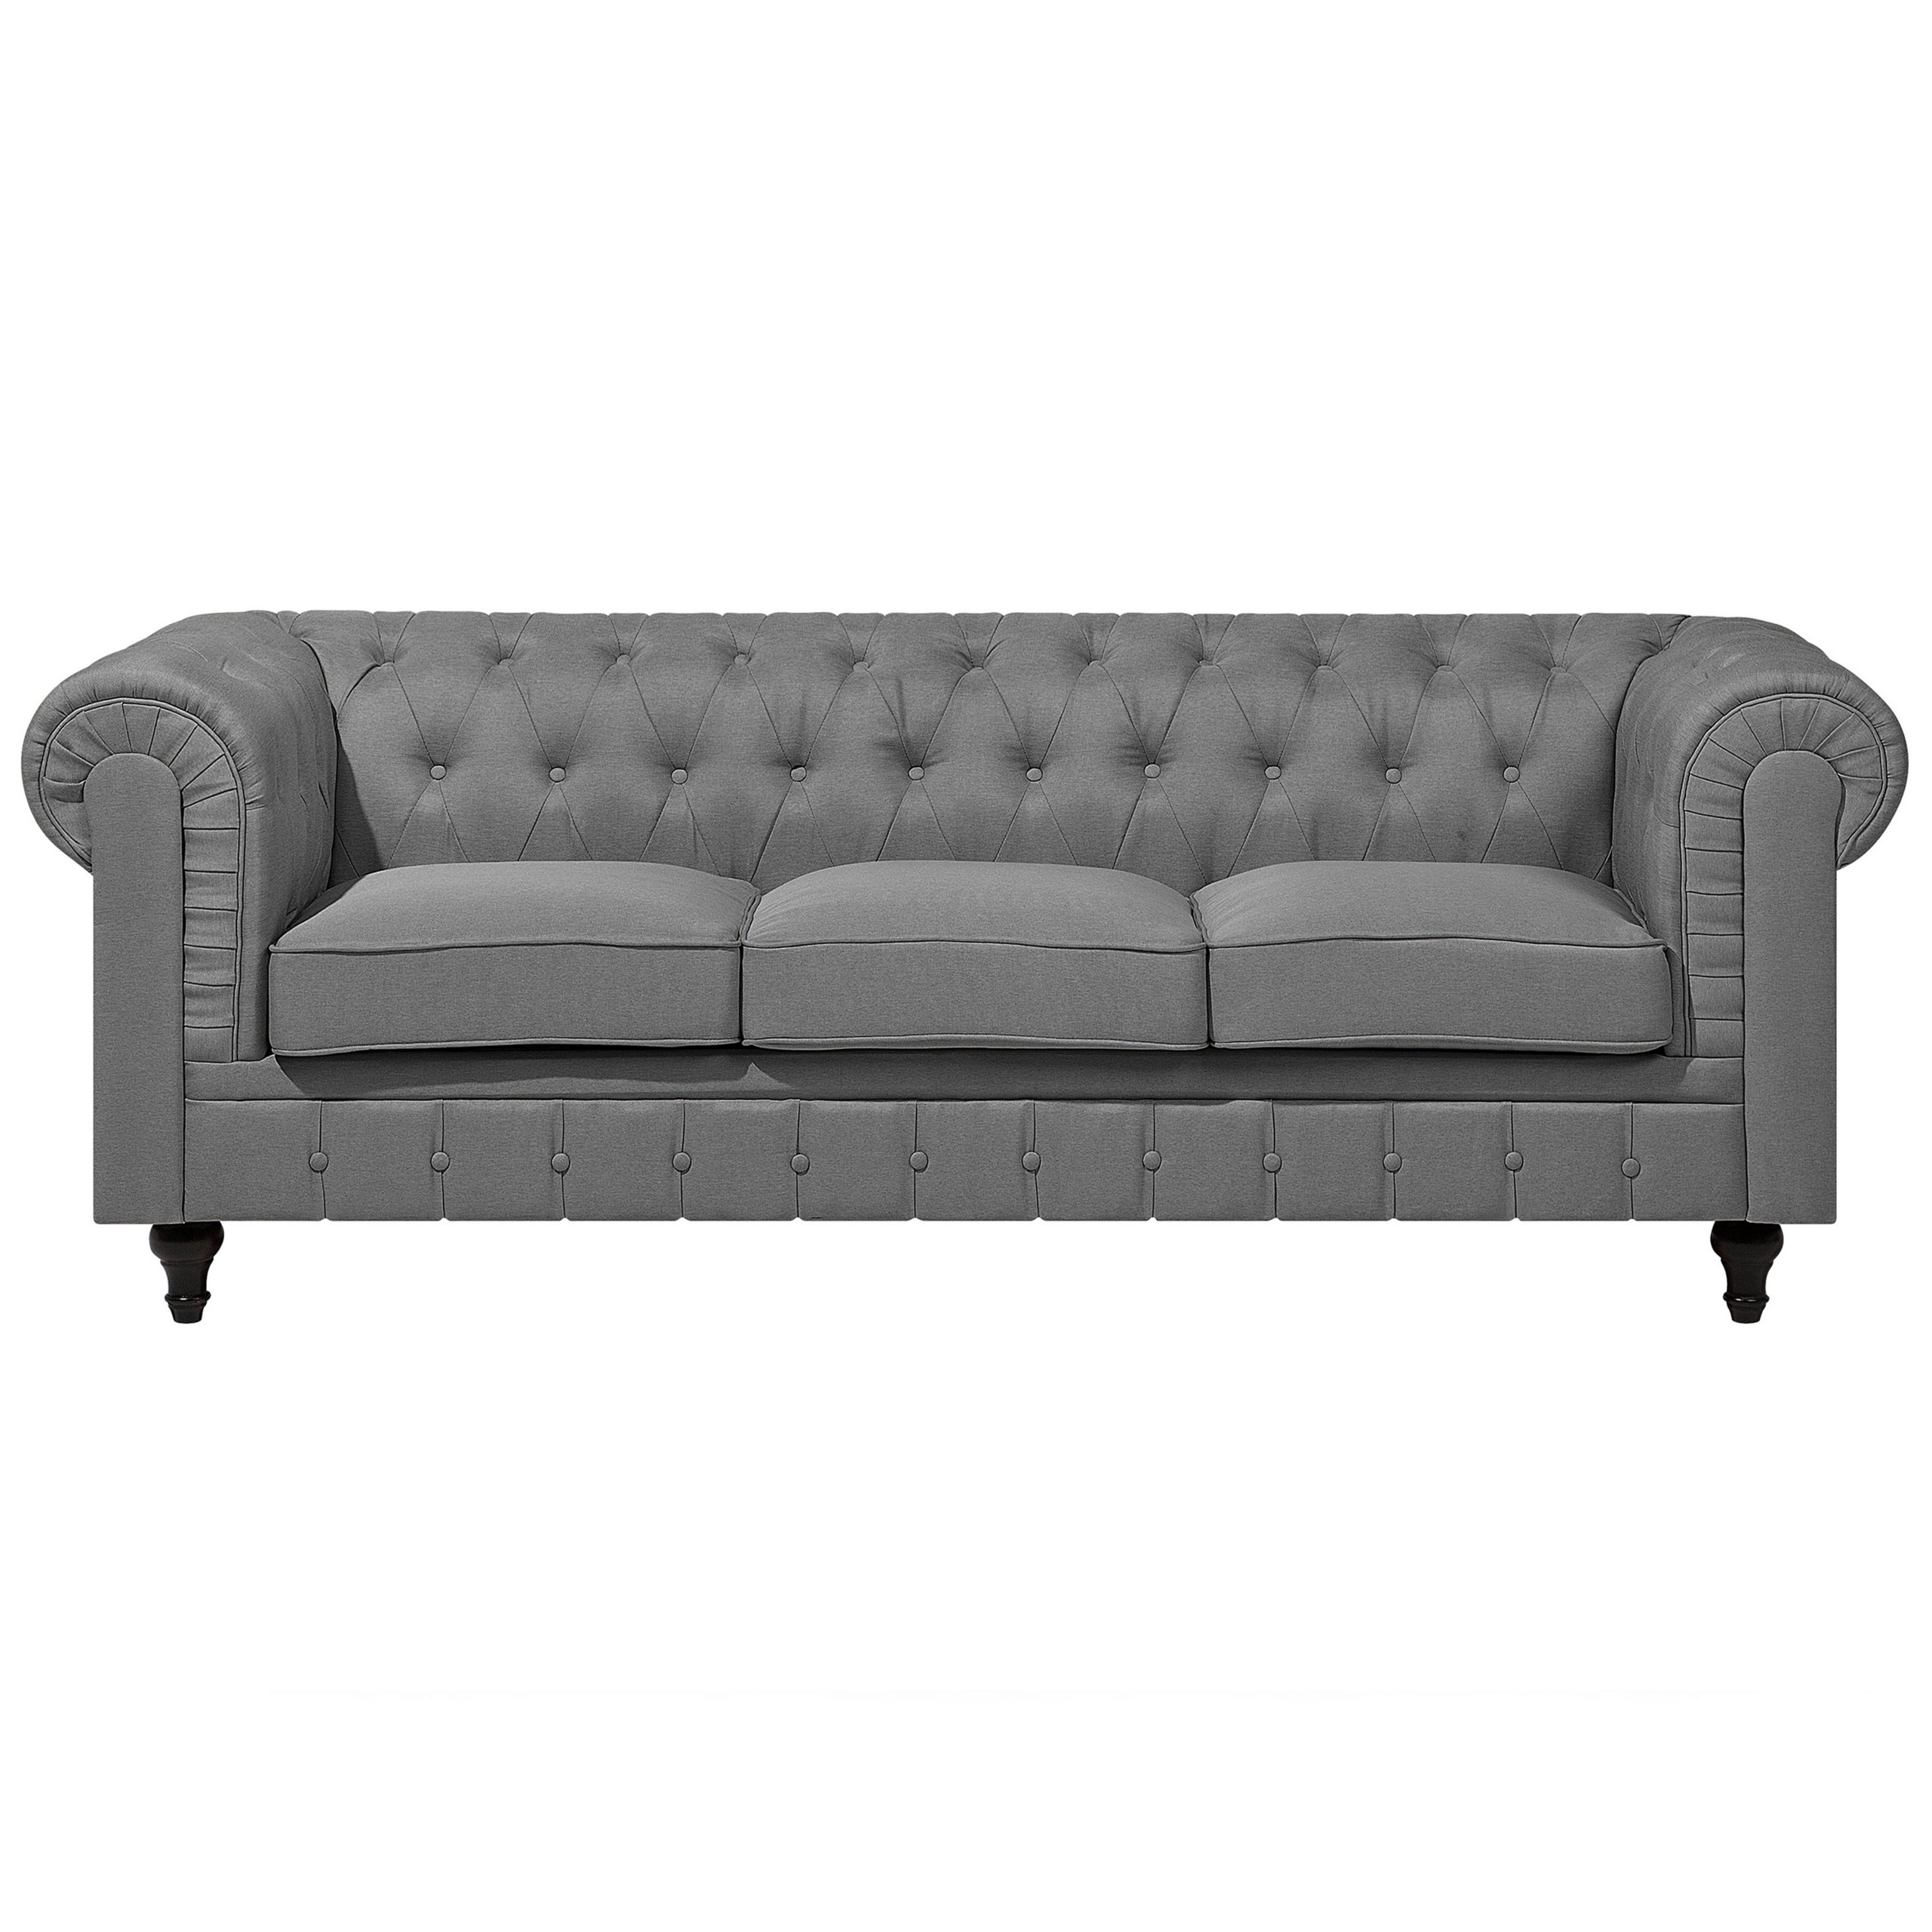 Beliani Chesterfield Sofa Light Grey Fabric Upholstery Dark Wood Legs 3 Seater Contemporary